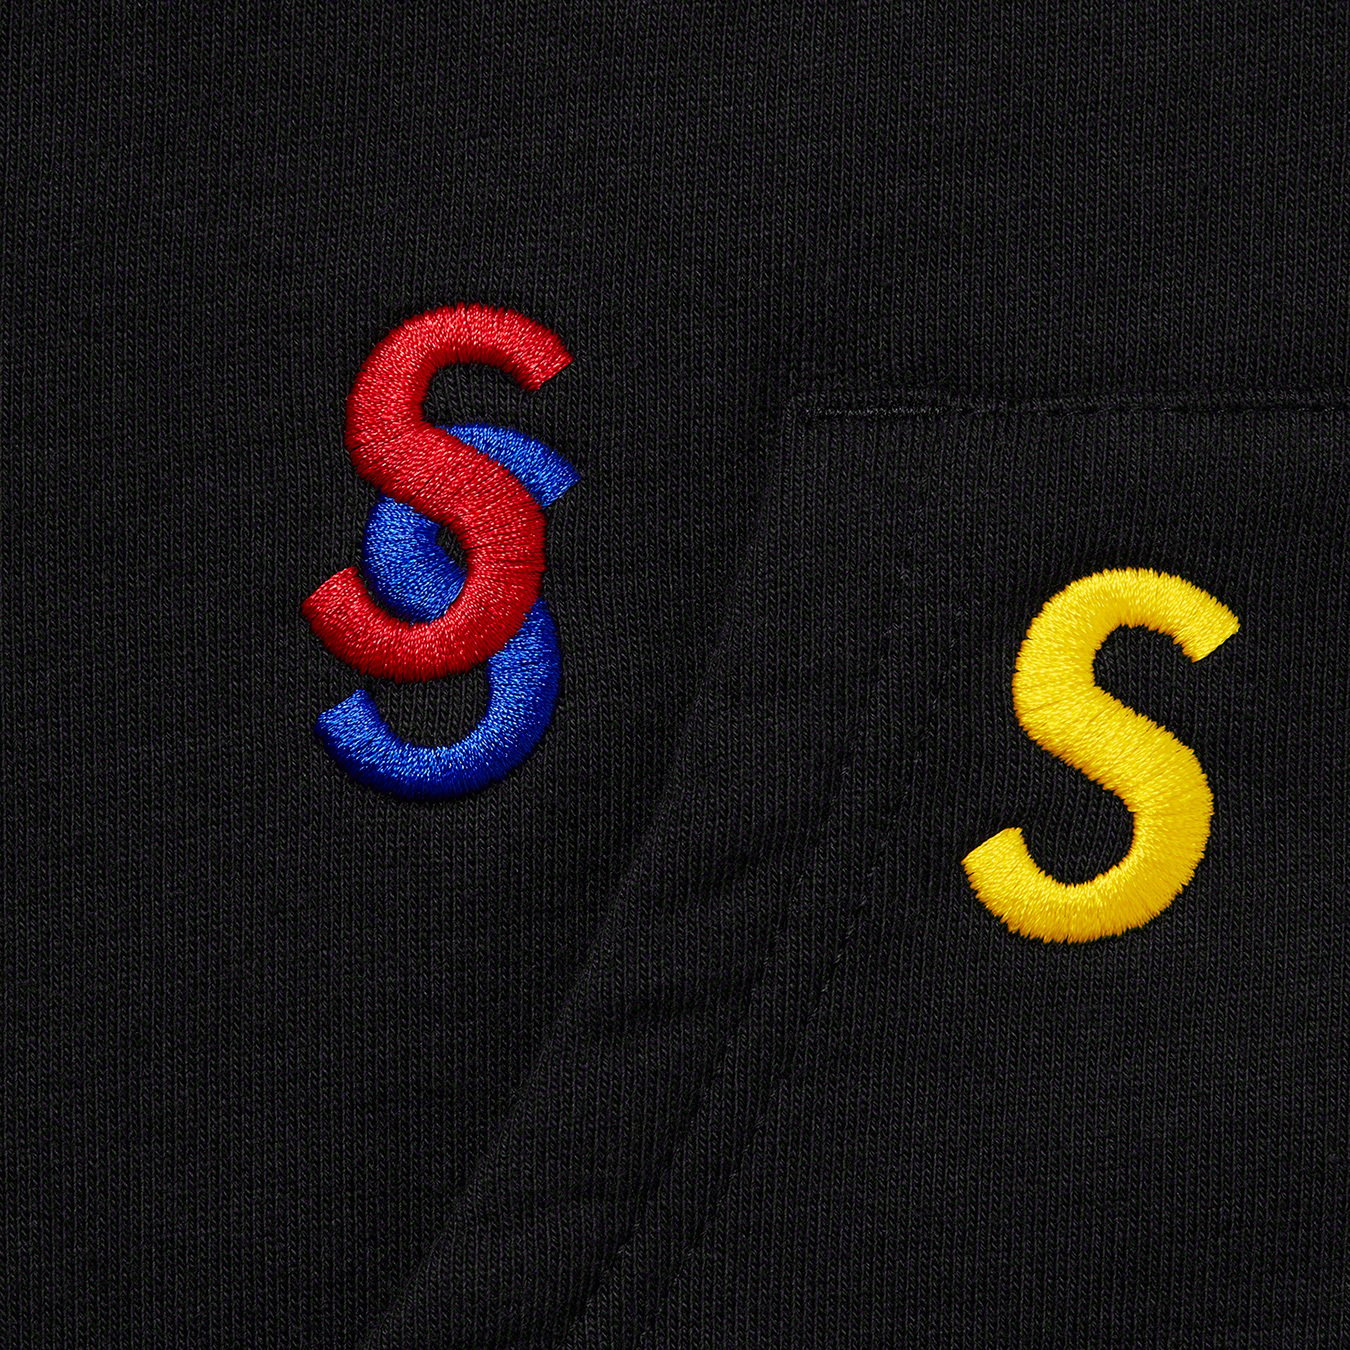 Embroidered S Hooded Sweatshirt - spring summer 2021 - Supreme